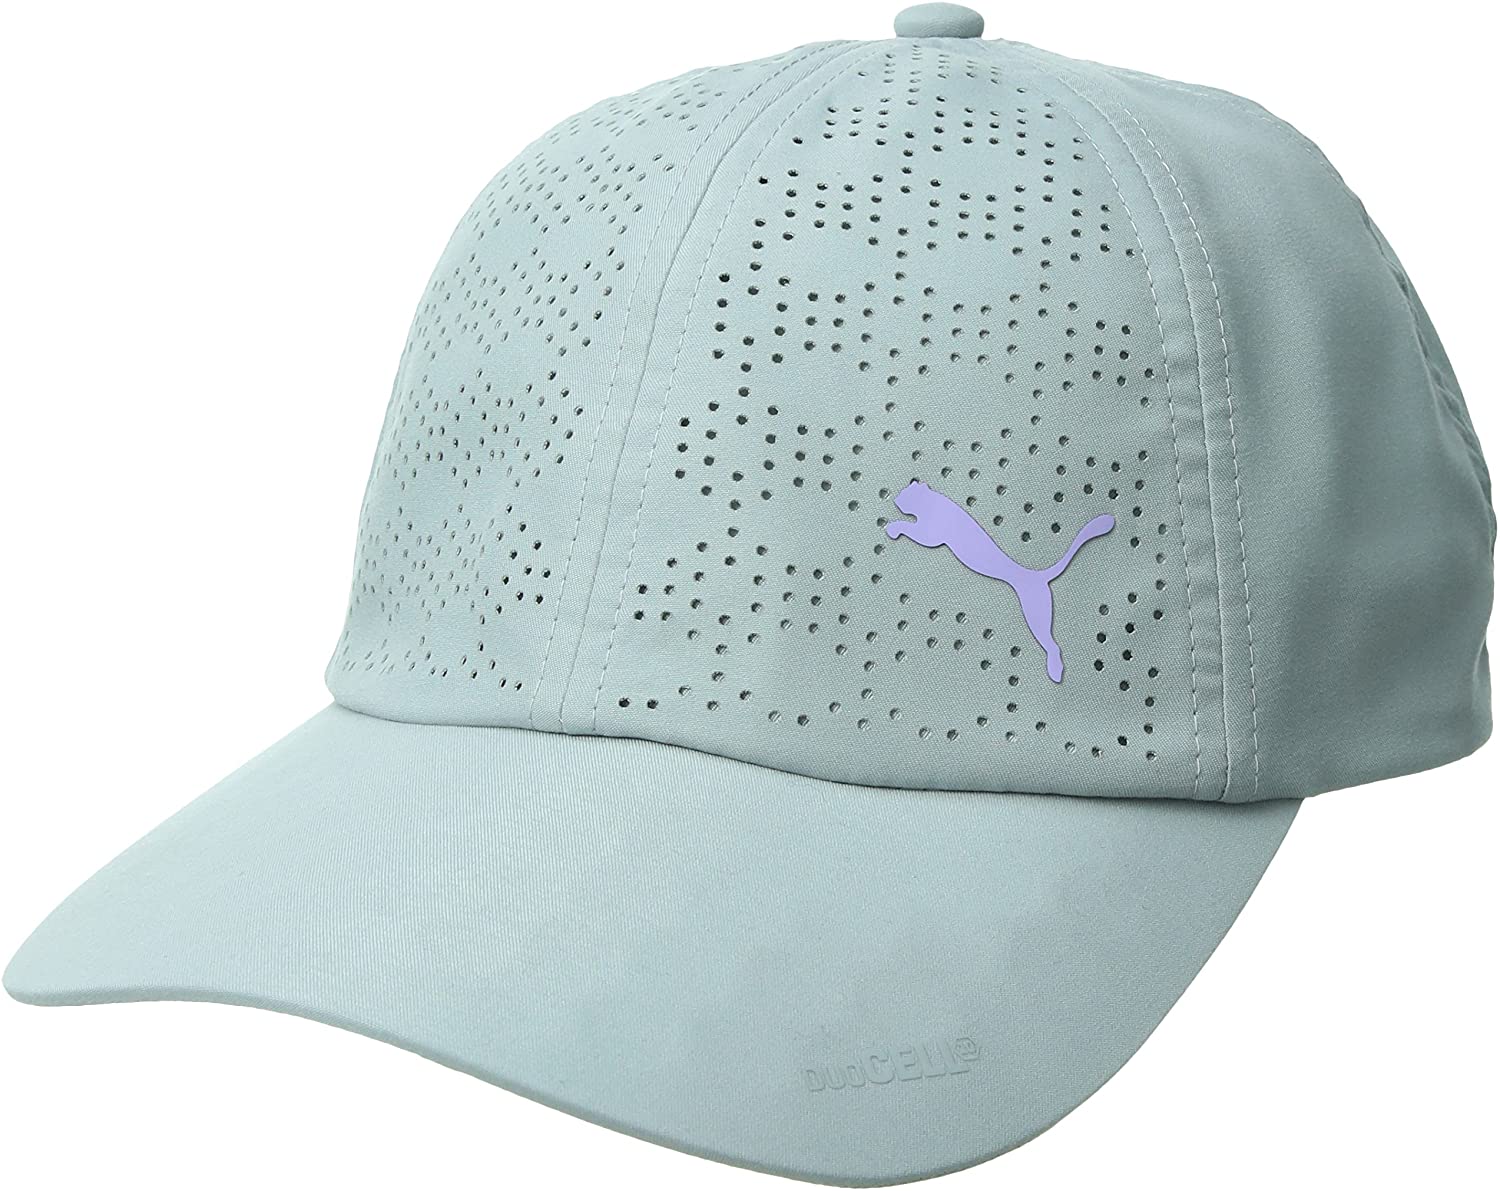 Cobra Womens 2018 Duocell Golf Hats